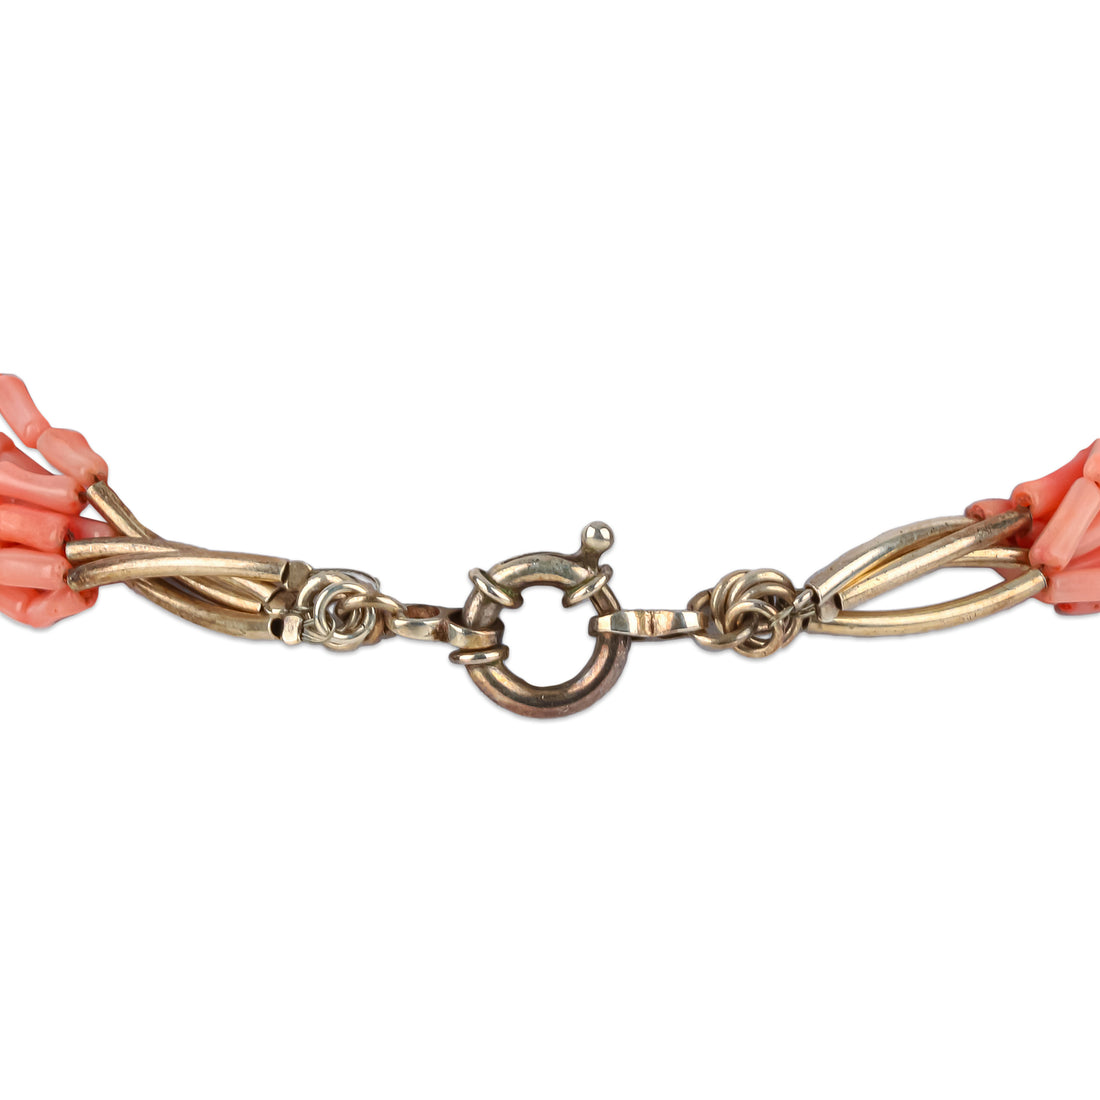 Sterling Silver 8-Strand Pink Coral Torsade Necklace